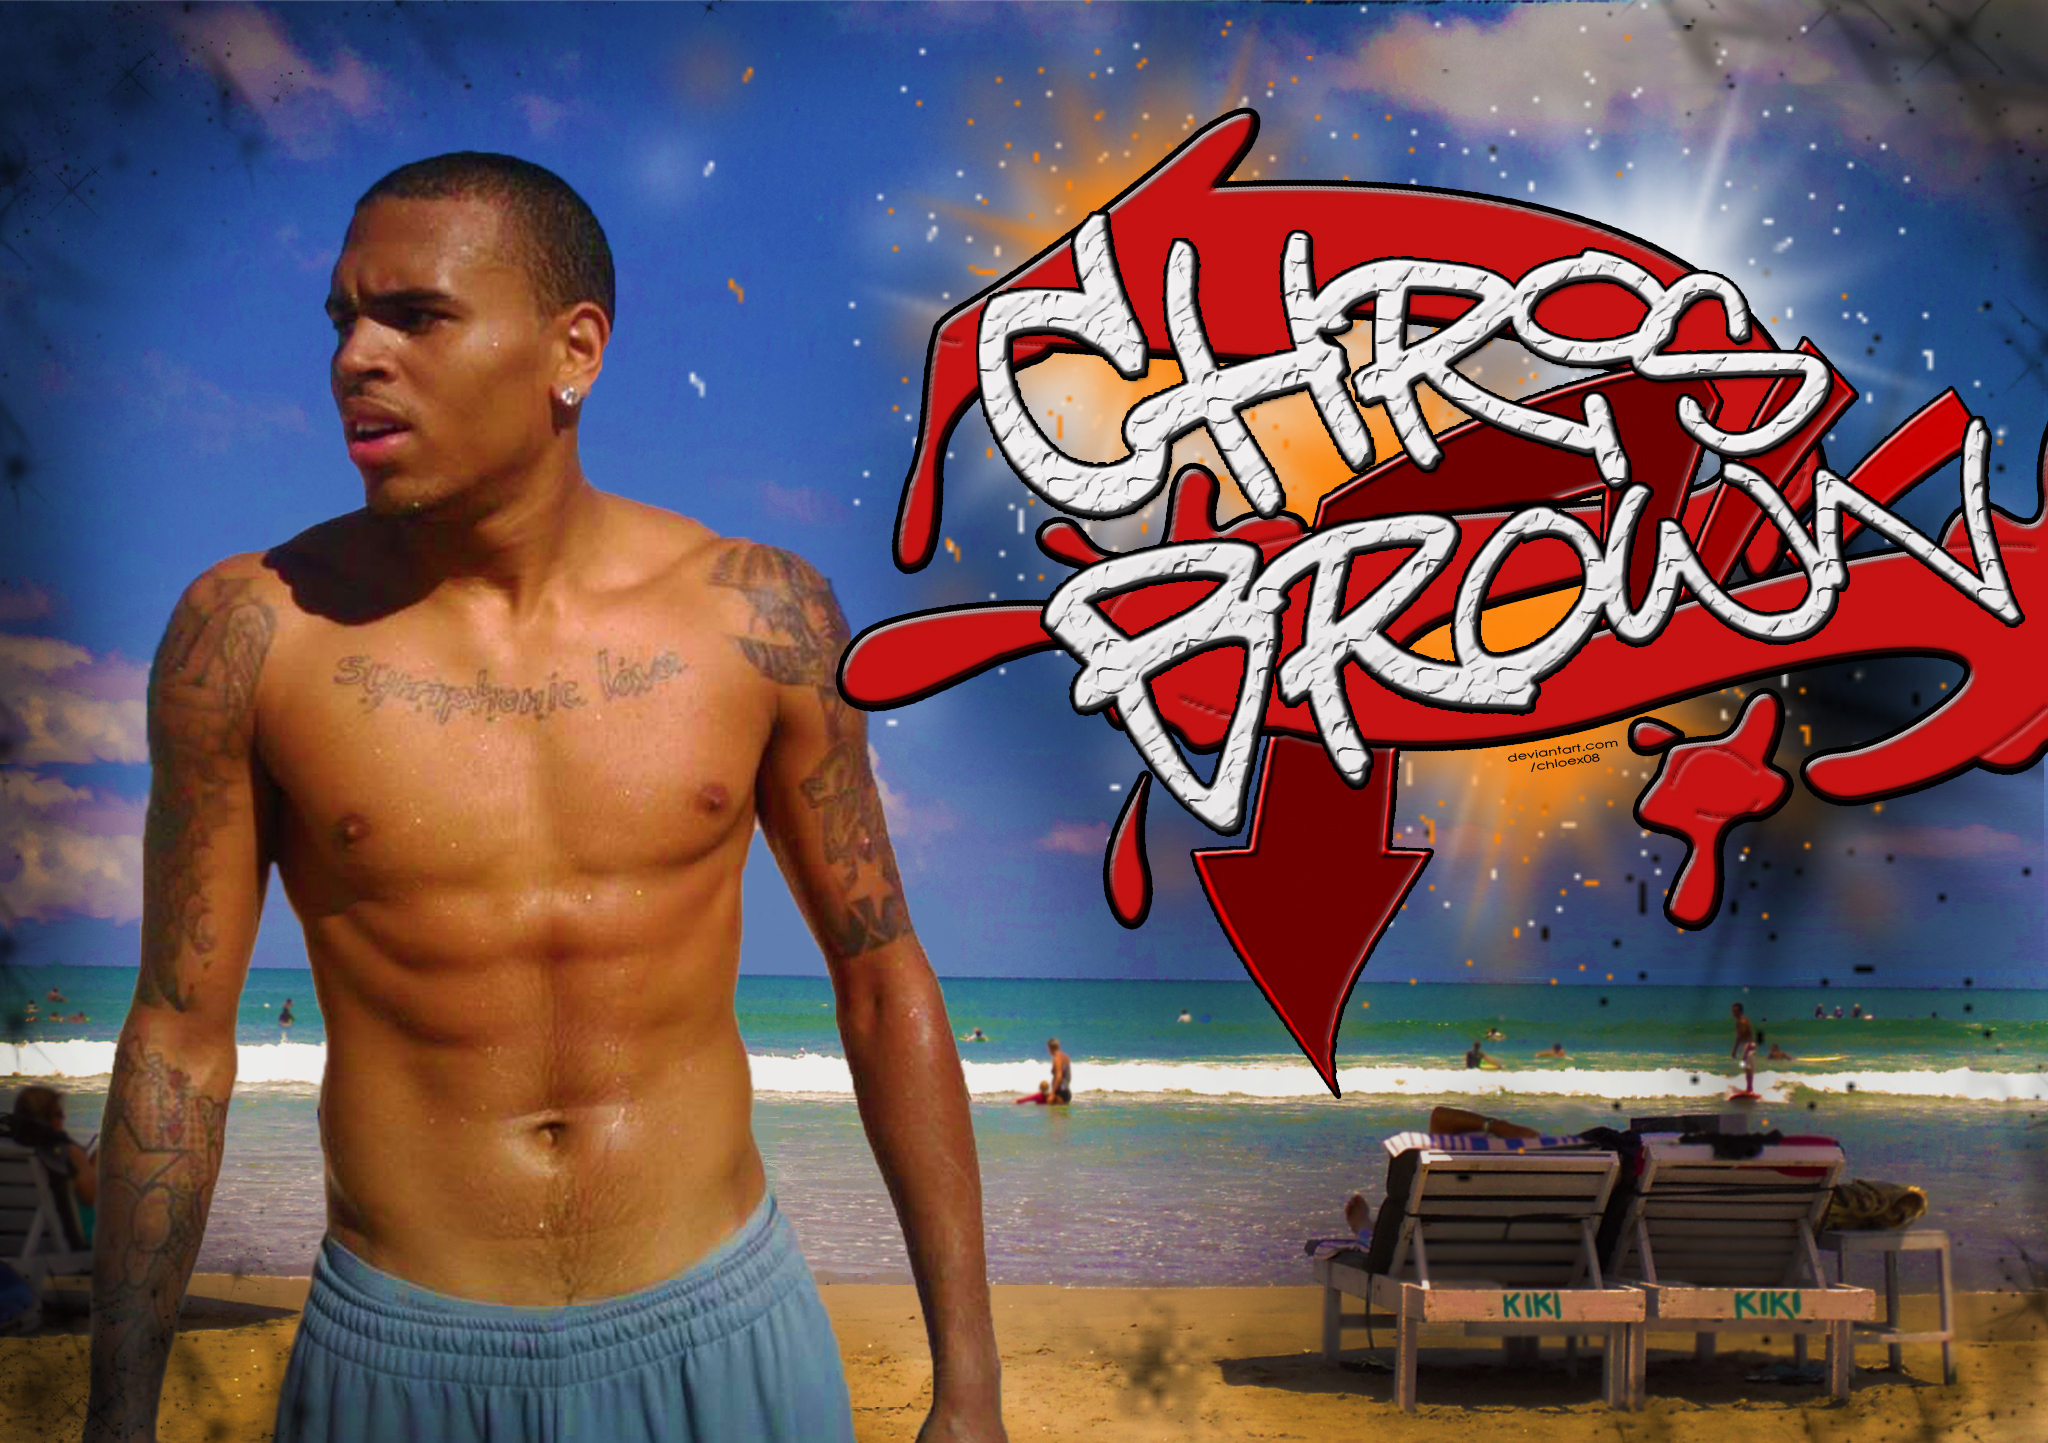 Chris Brown Tattoos Image Thecelebritypix